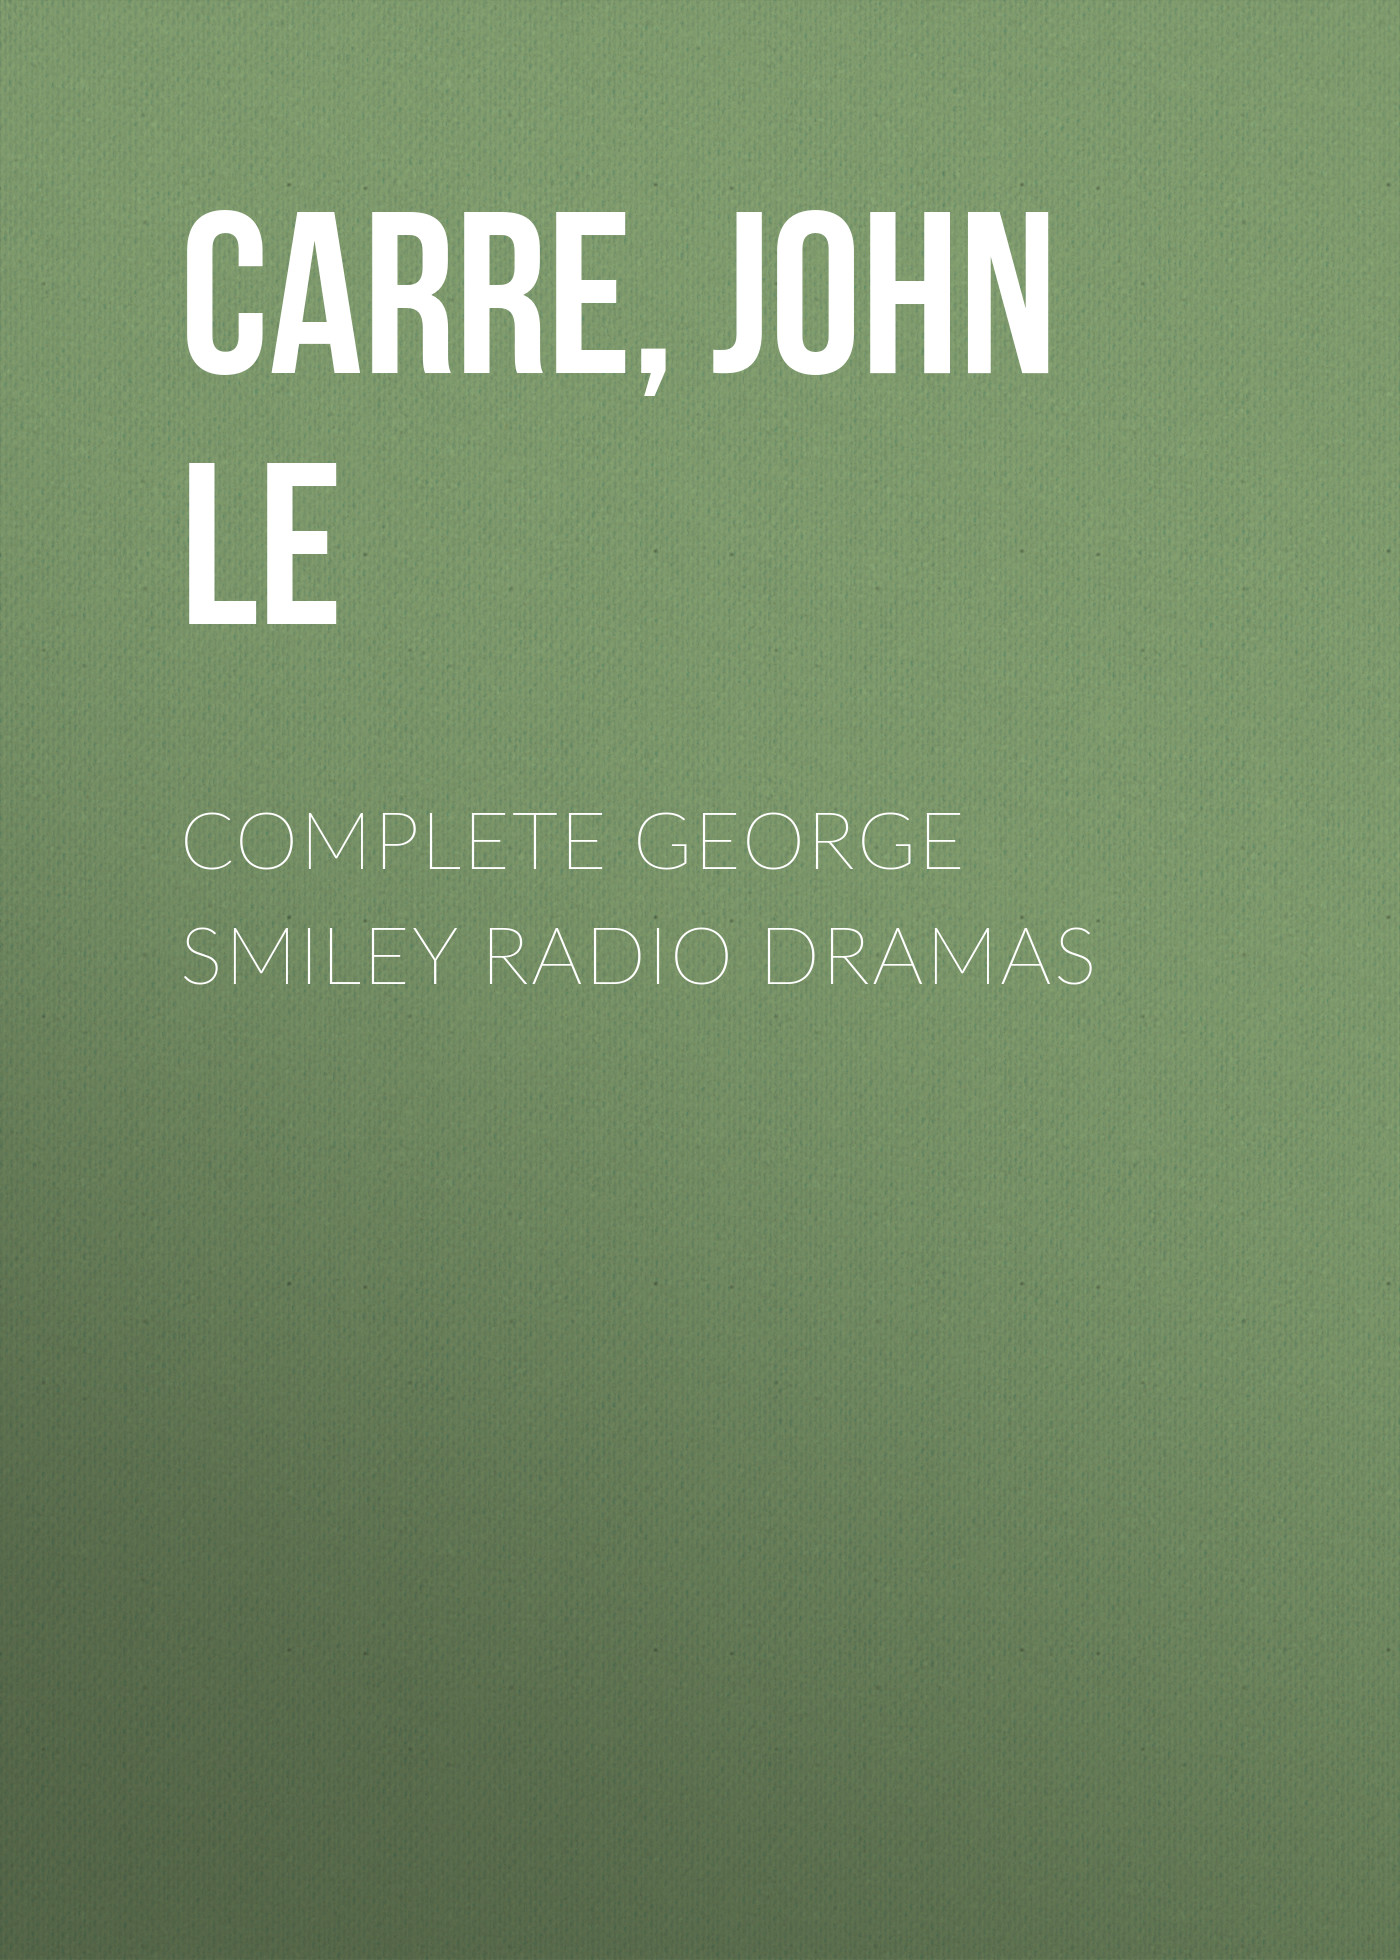 Complete George Smiley Radio Dramas